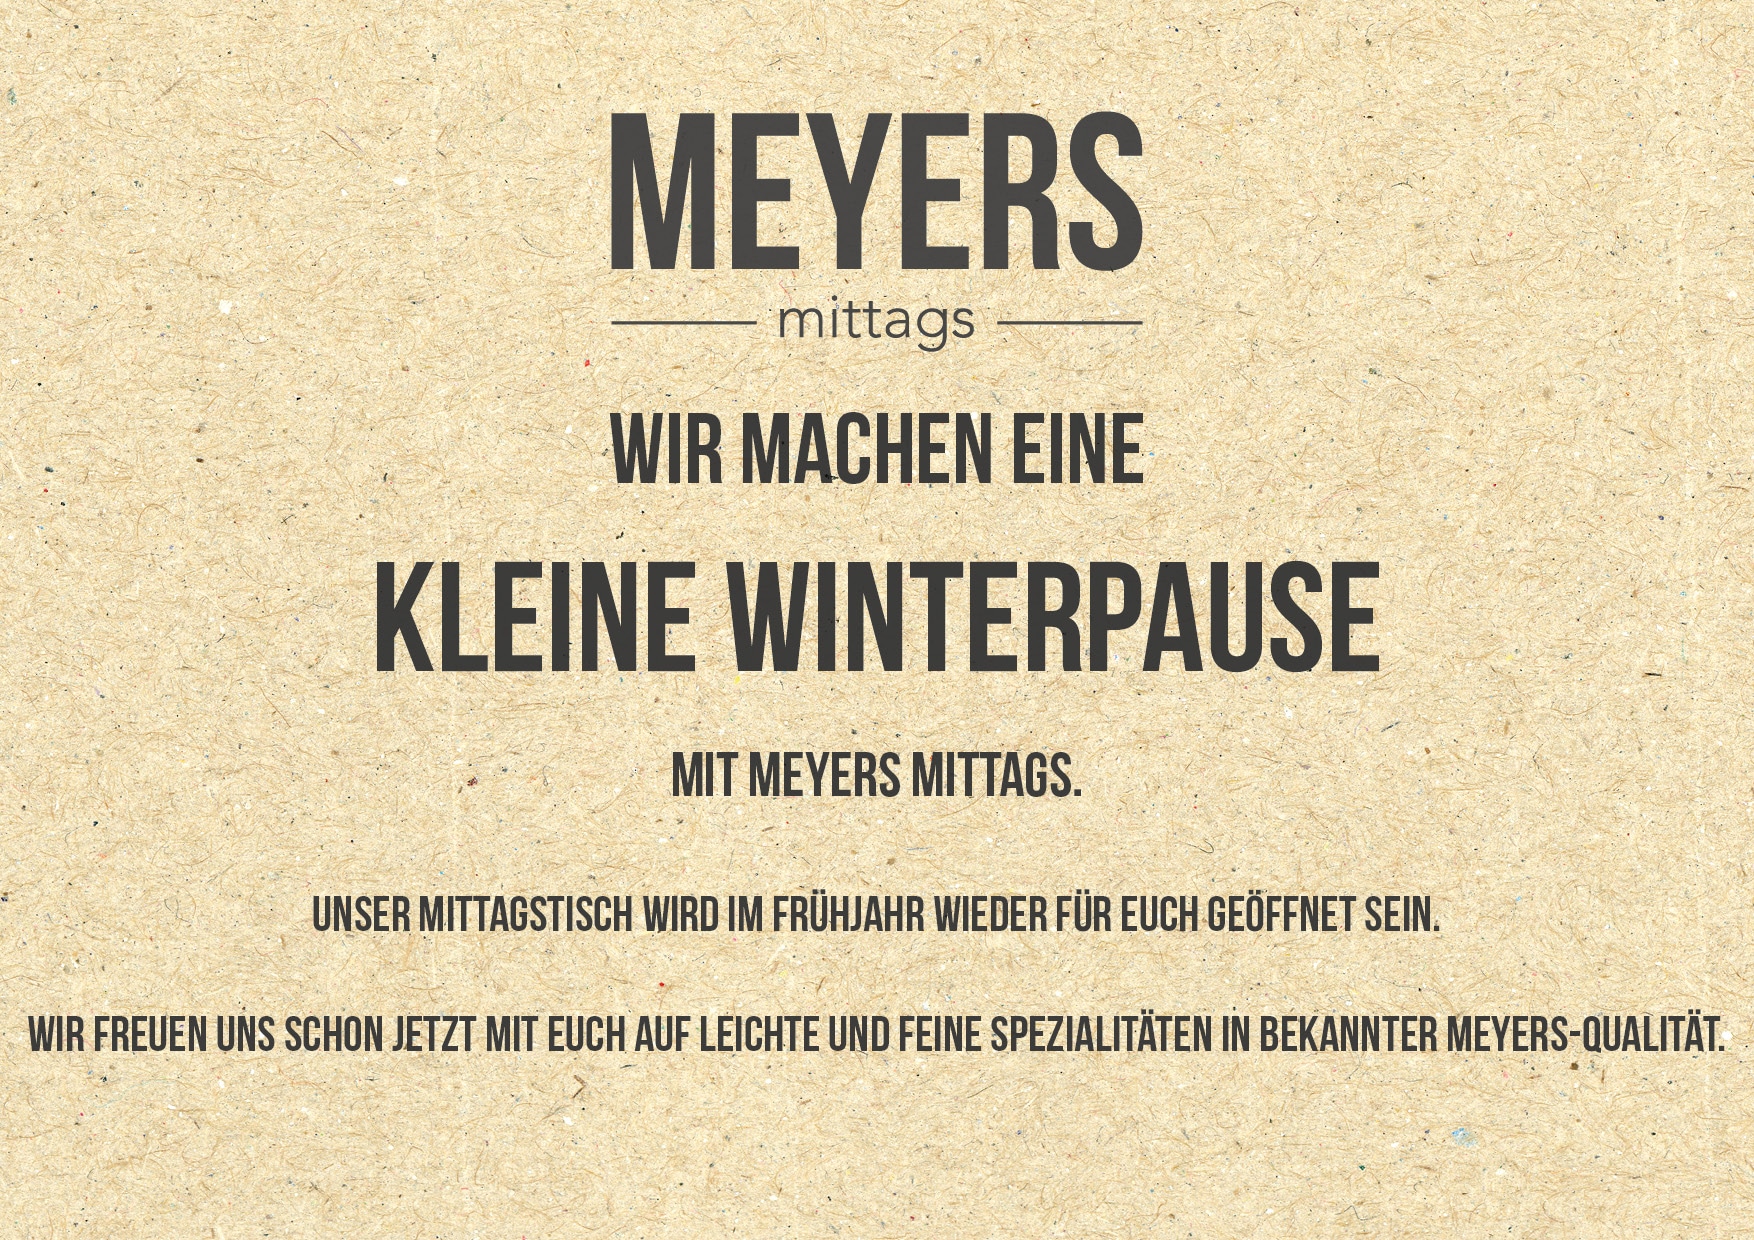 Winterpause Meyers mittags